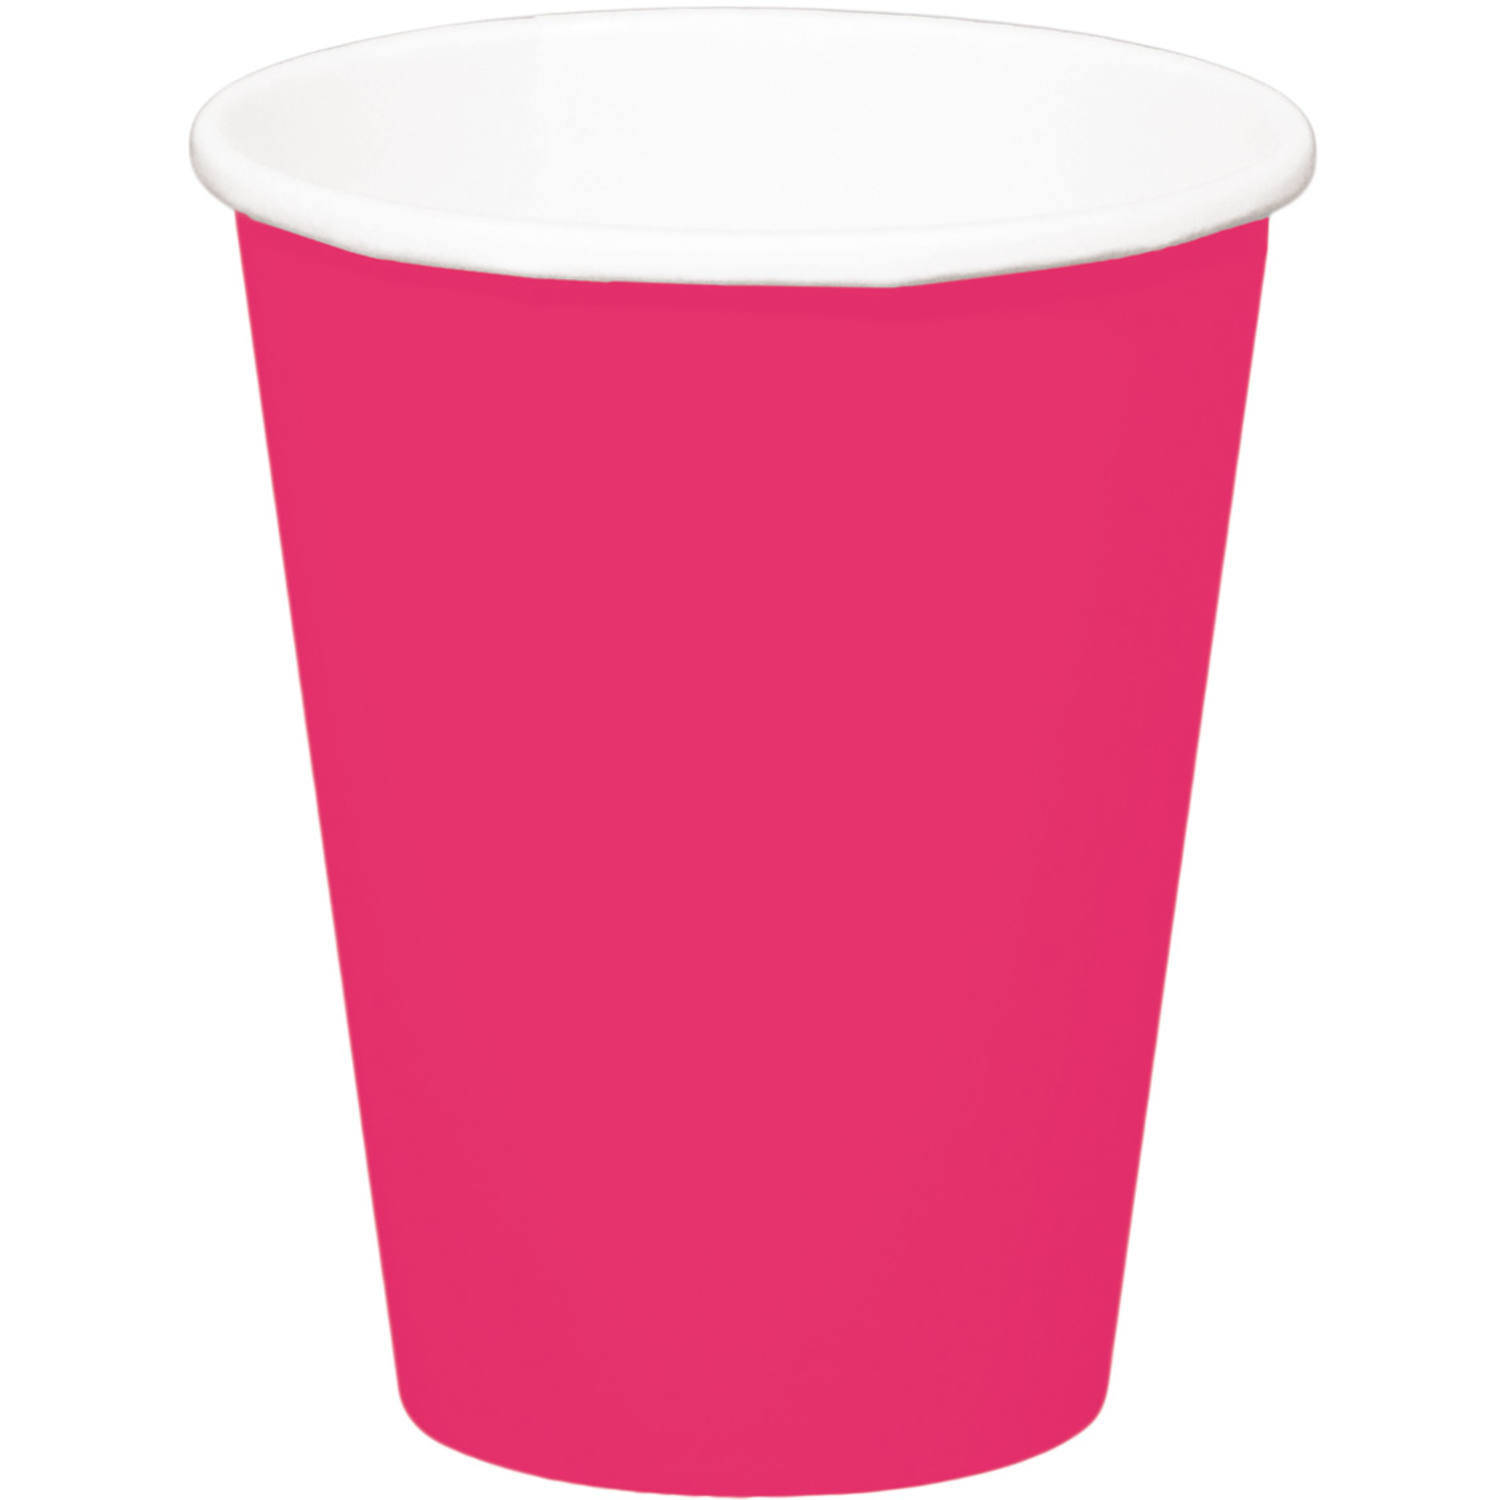 24x stuks drinkbekers van papier fuchsia roze 350 ml - Feestbekertjes